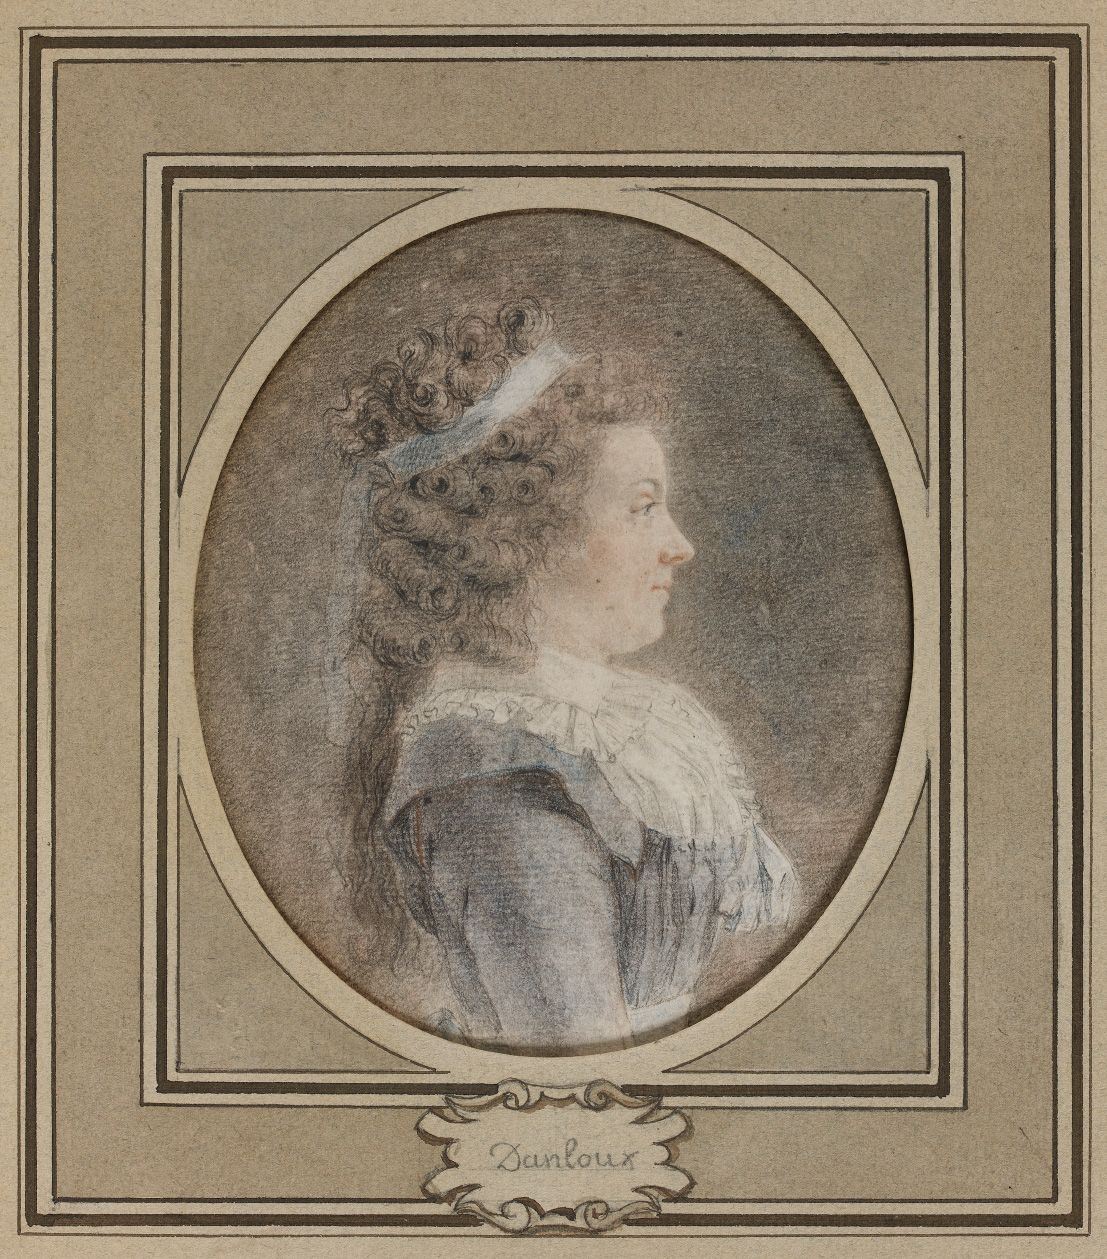 Null 18世纪的法国画派：一个女人的侧面肖像。水彩画，黑色铅笔和红色粉笔。画座上有 "Danloux "的注释。高14 - 宽12,3厘米